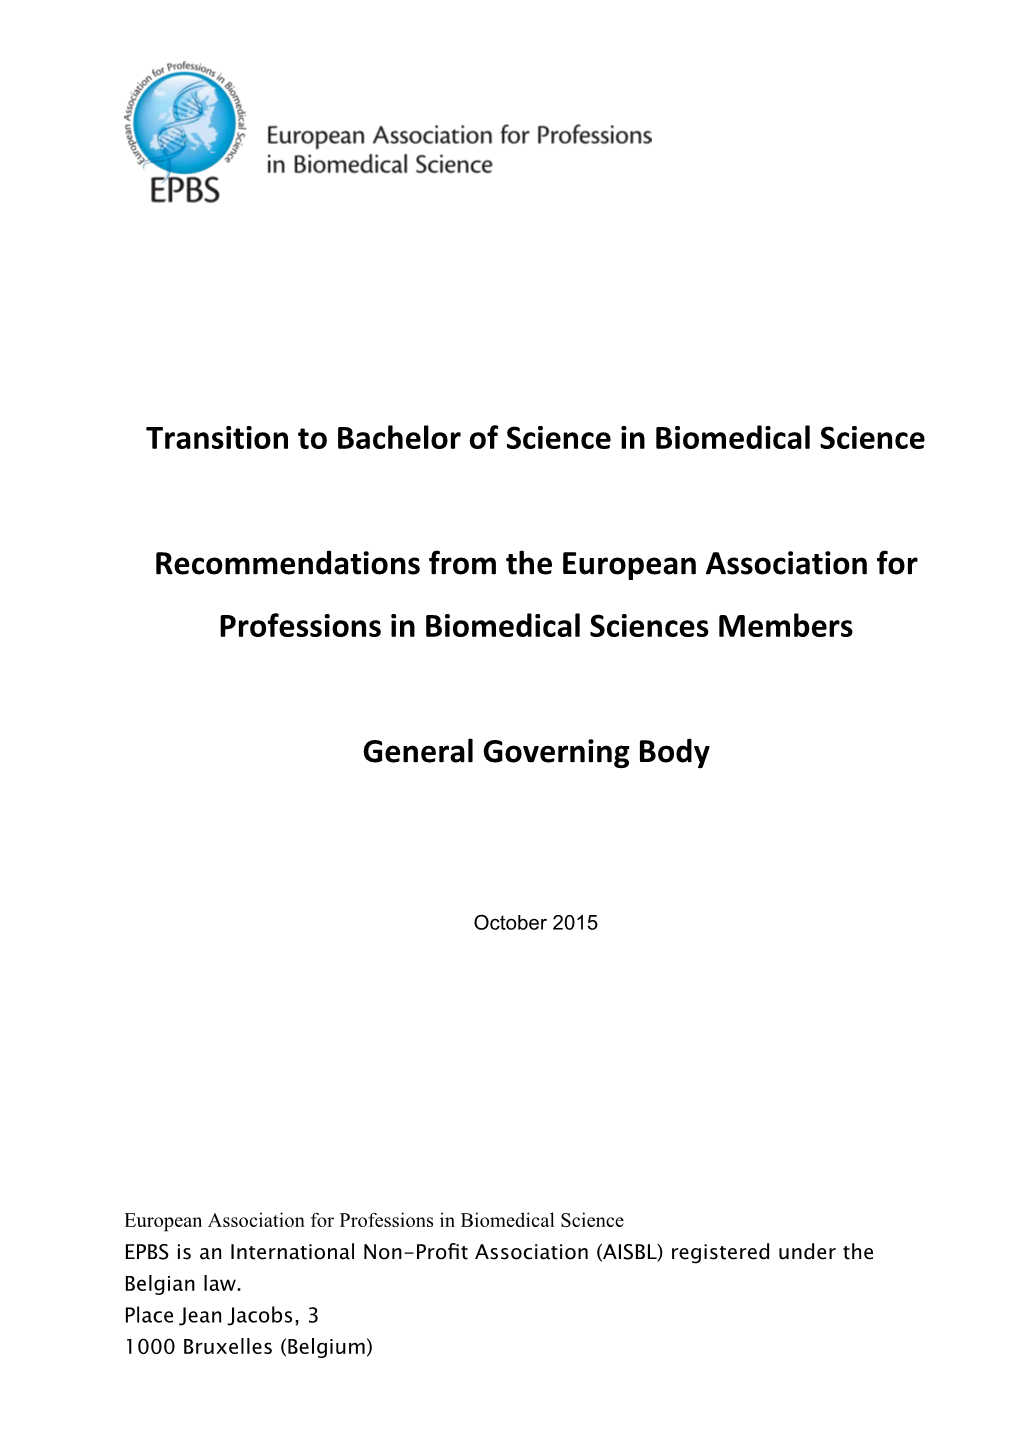 European Association for Professions in Biomedical Sciences Members